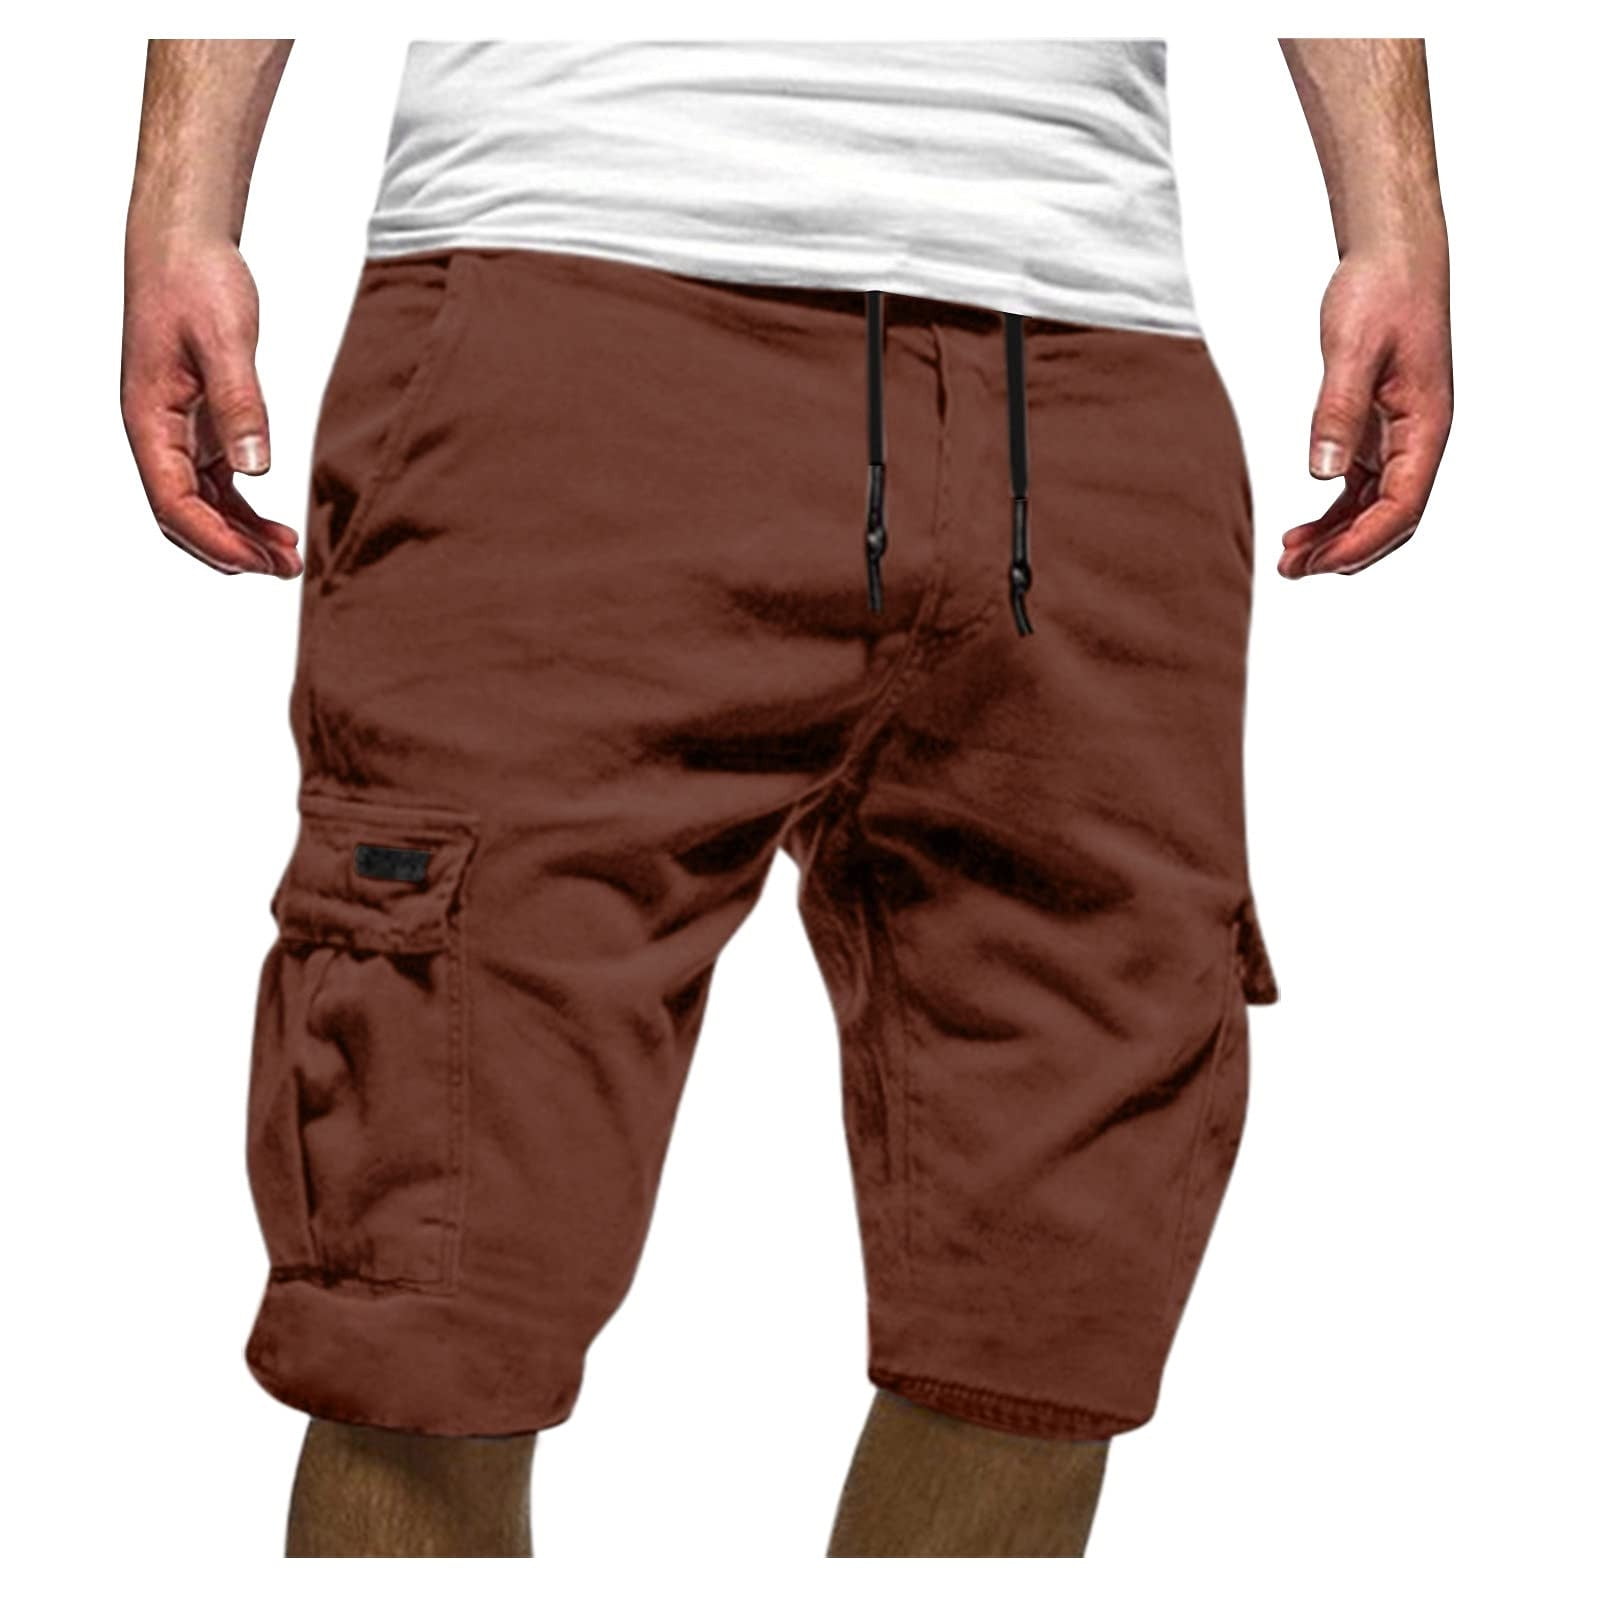 ChaseOverIN Men Multi pocket cargo shorts (Half pants)